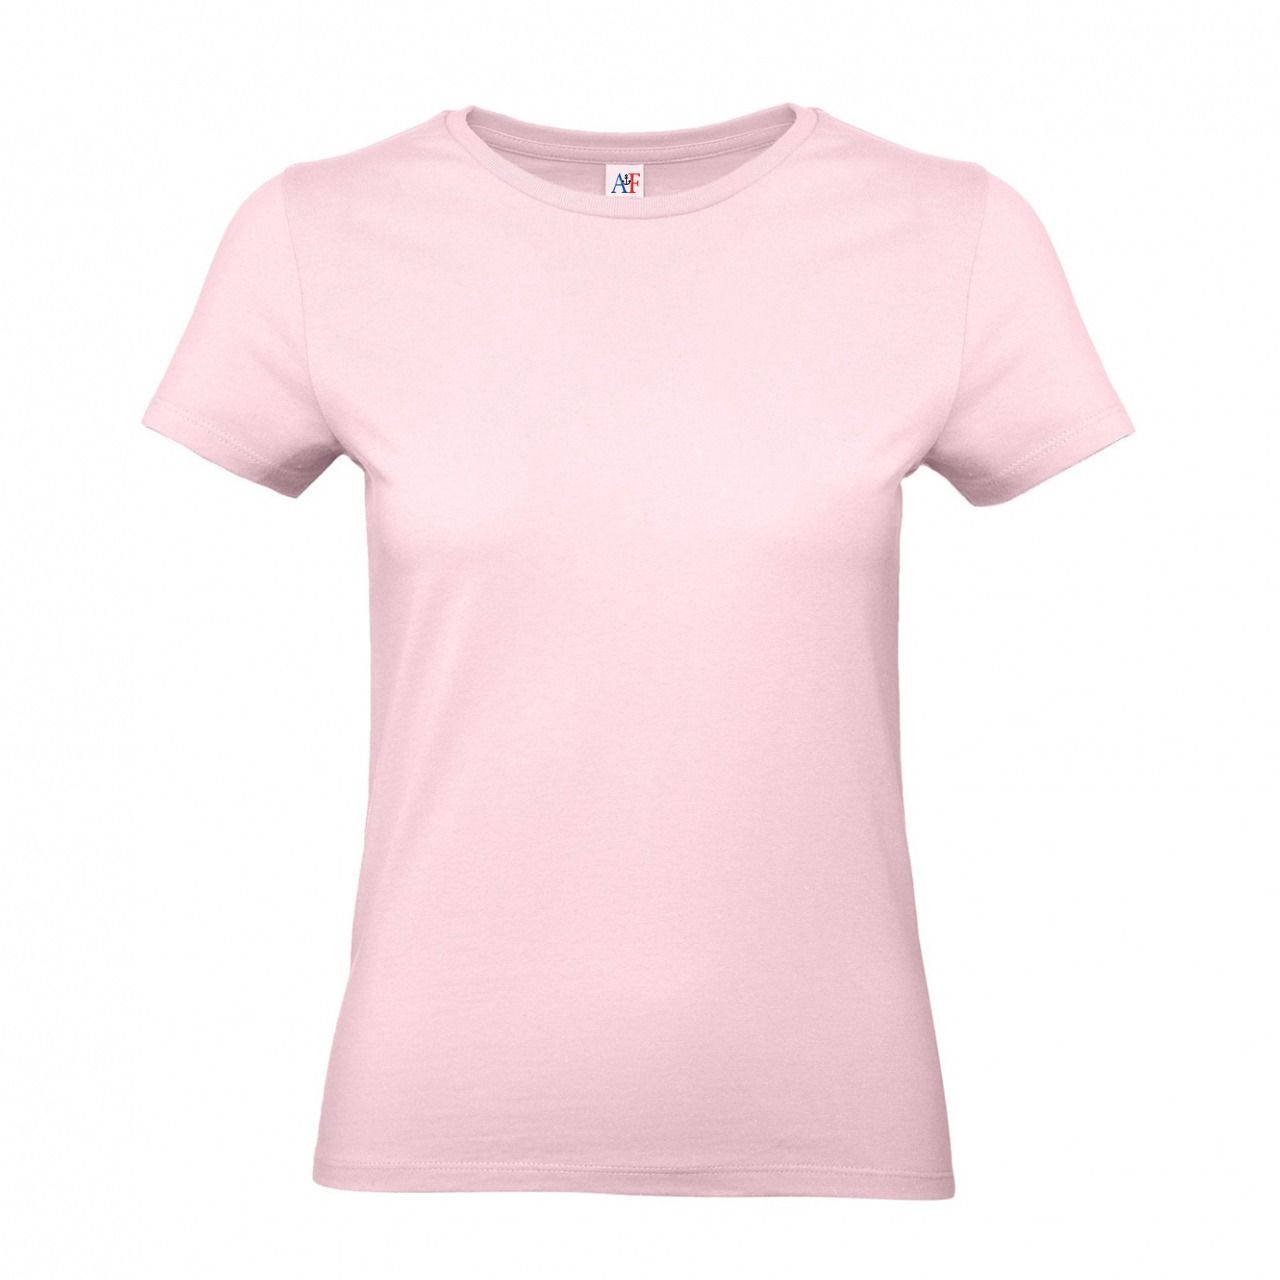 1005 Women's Fit Tee 4.3 Oz - Baby Pink Color AF APPARELS(USA)